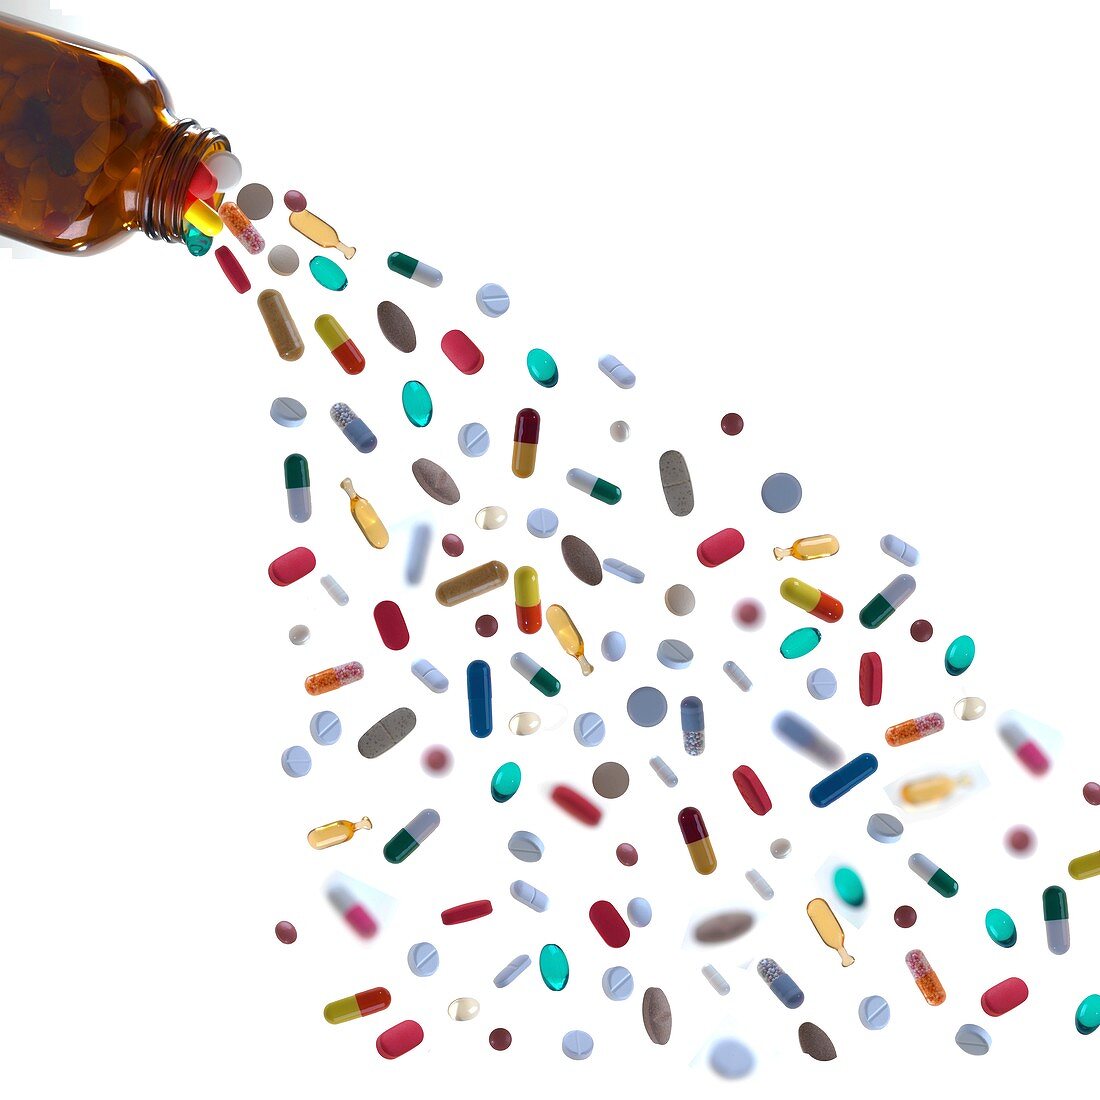 Assorted pills